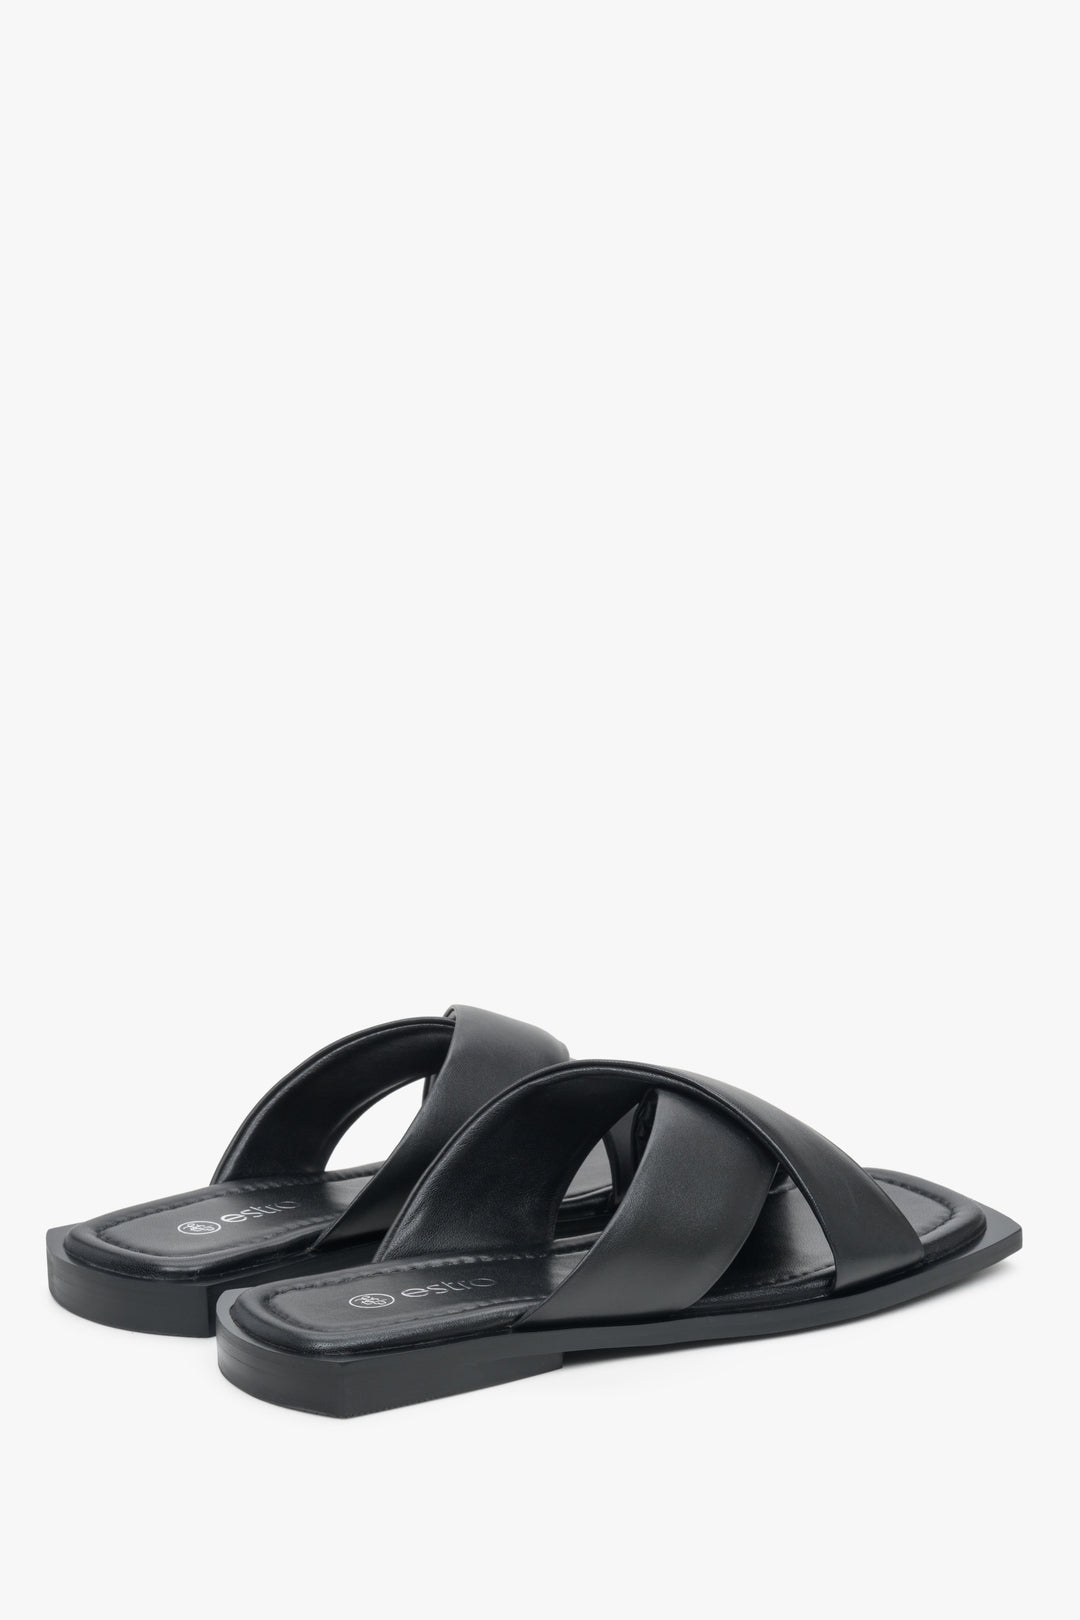 Women's black slide sandals, Estro brand.